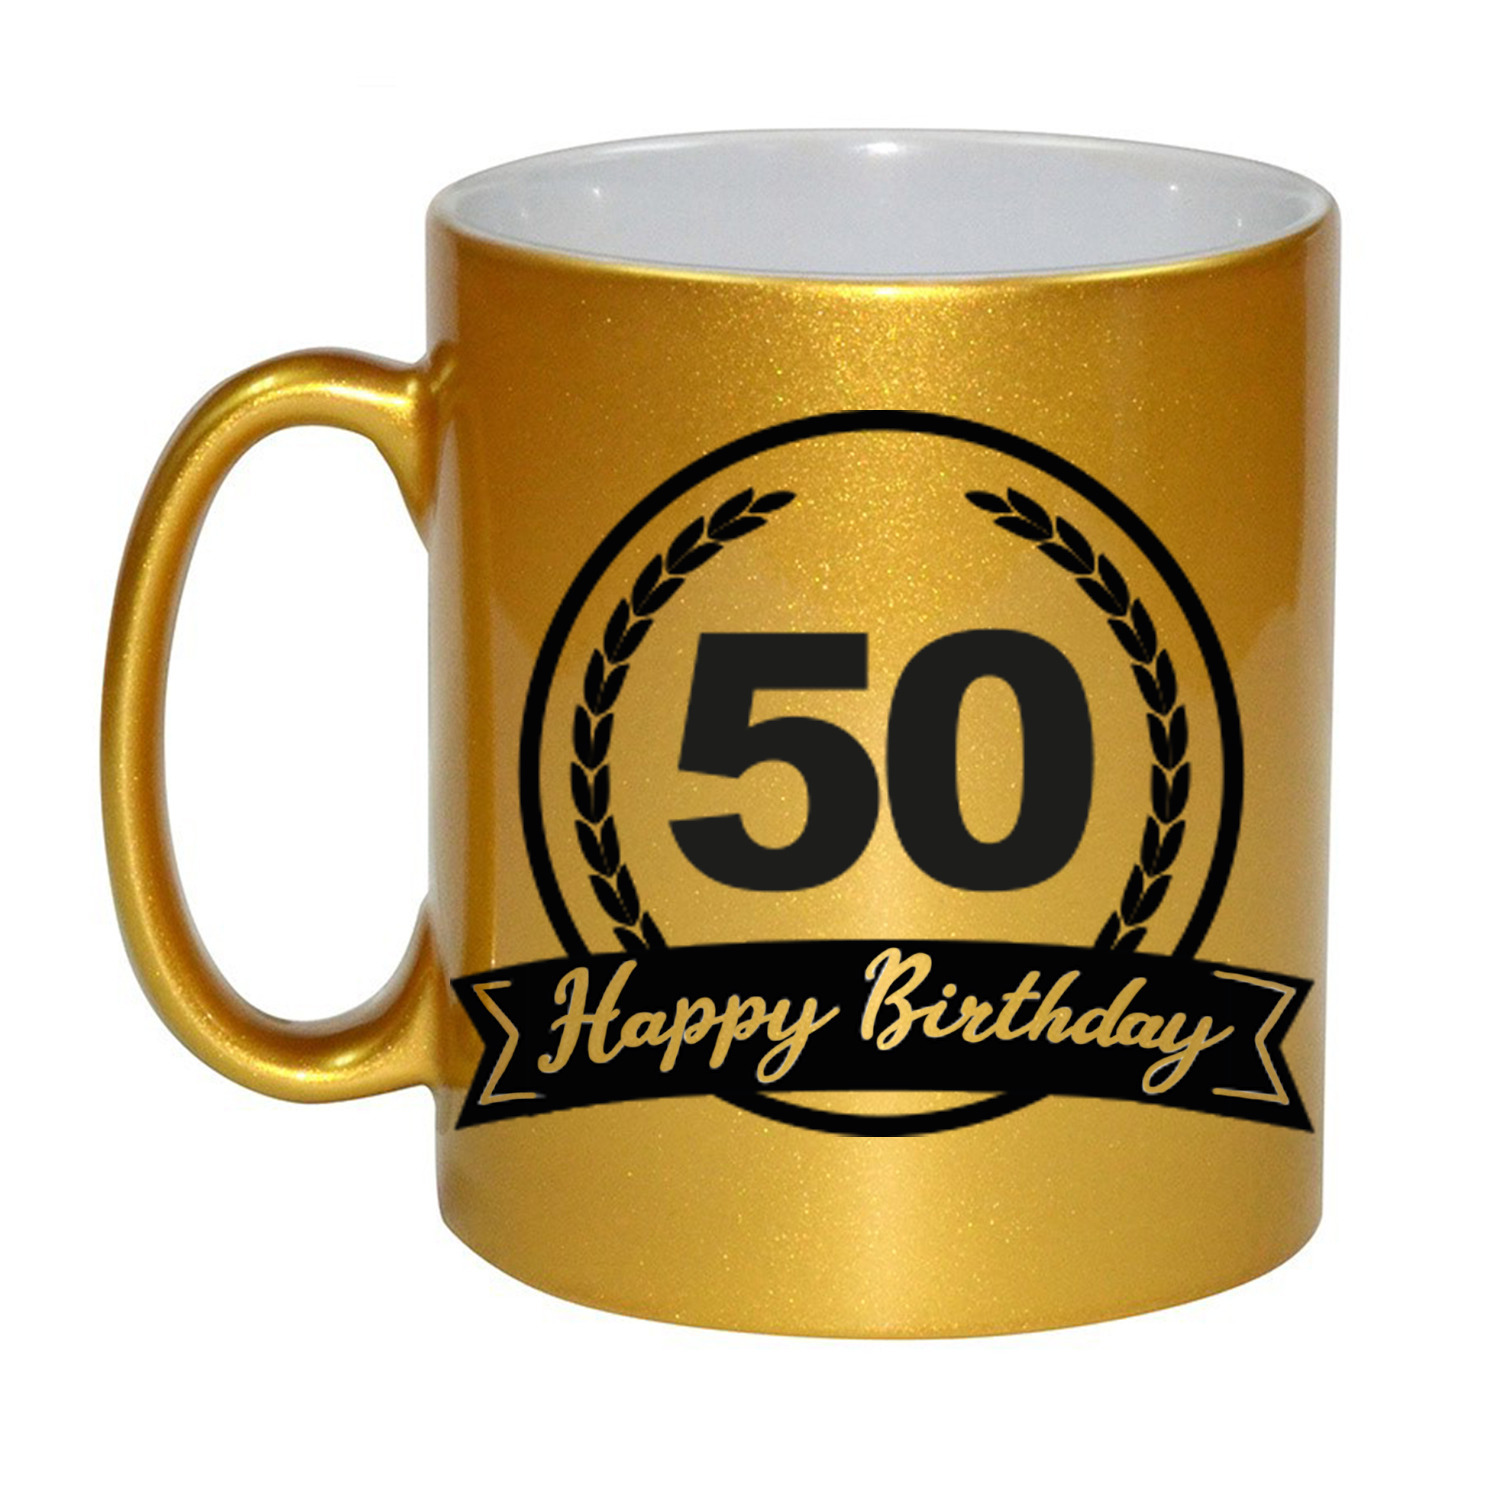 Happy Birthday 50 years gouden cadeau mok / beker met wimpel 330 ml